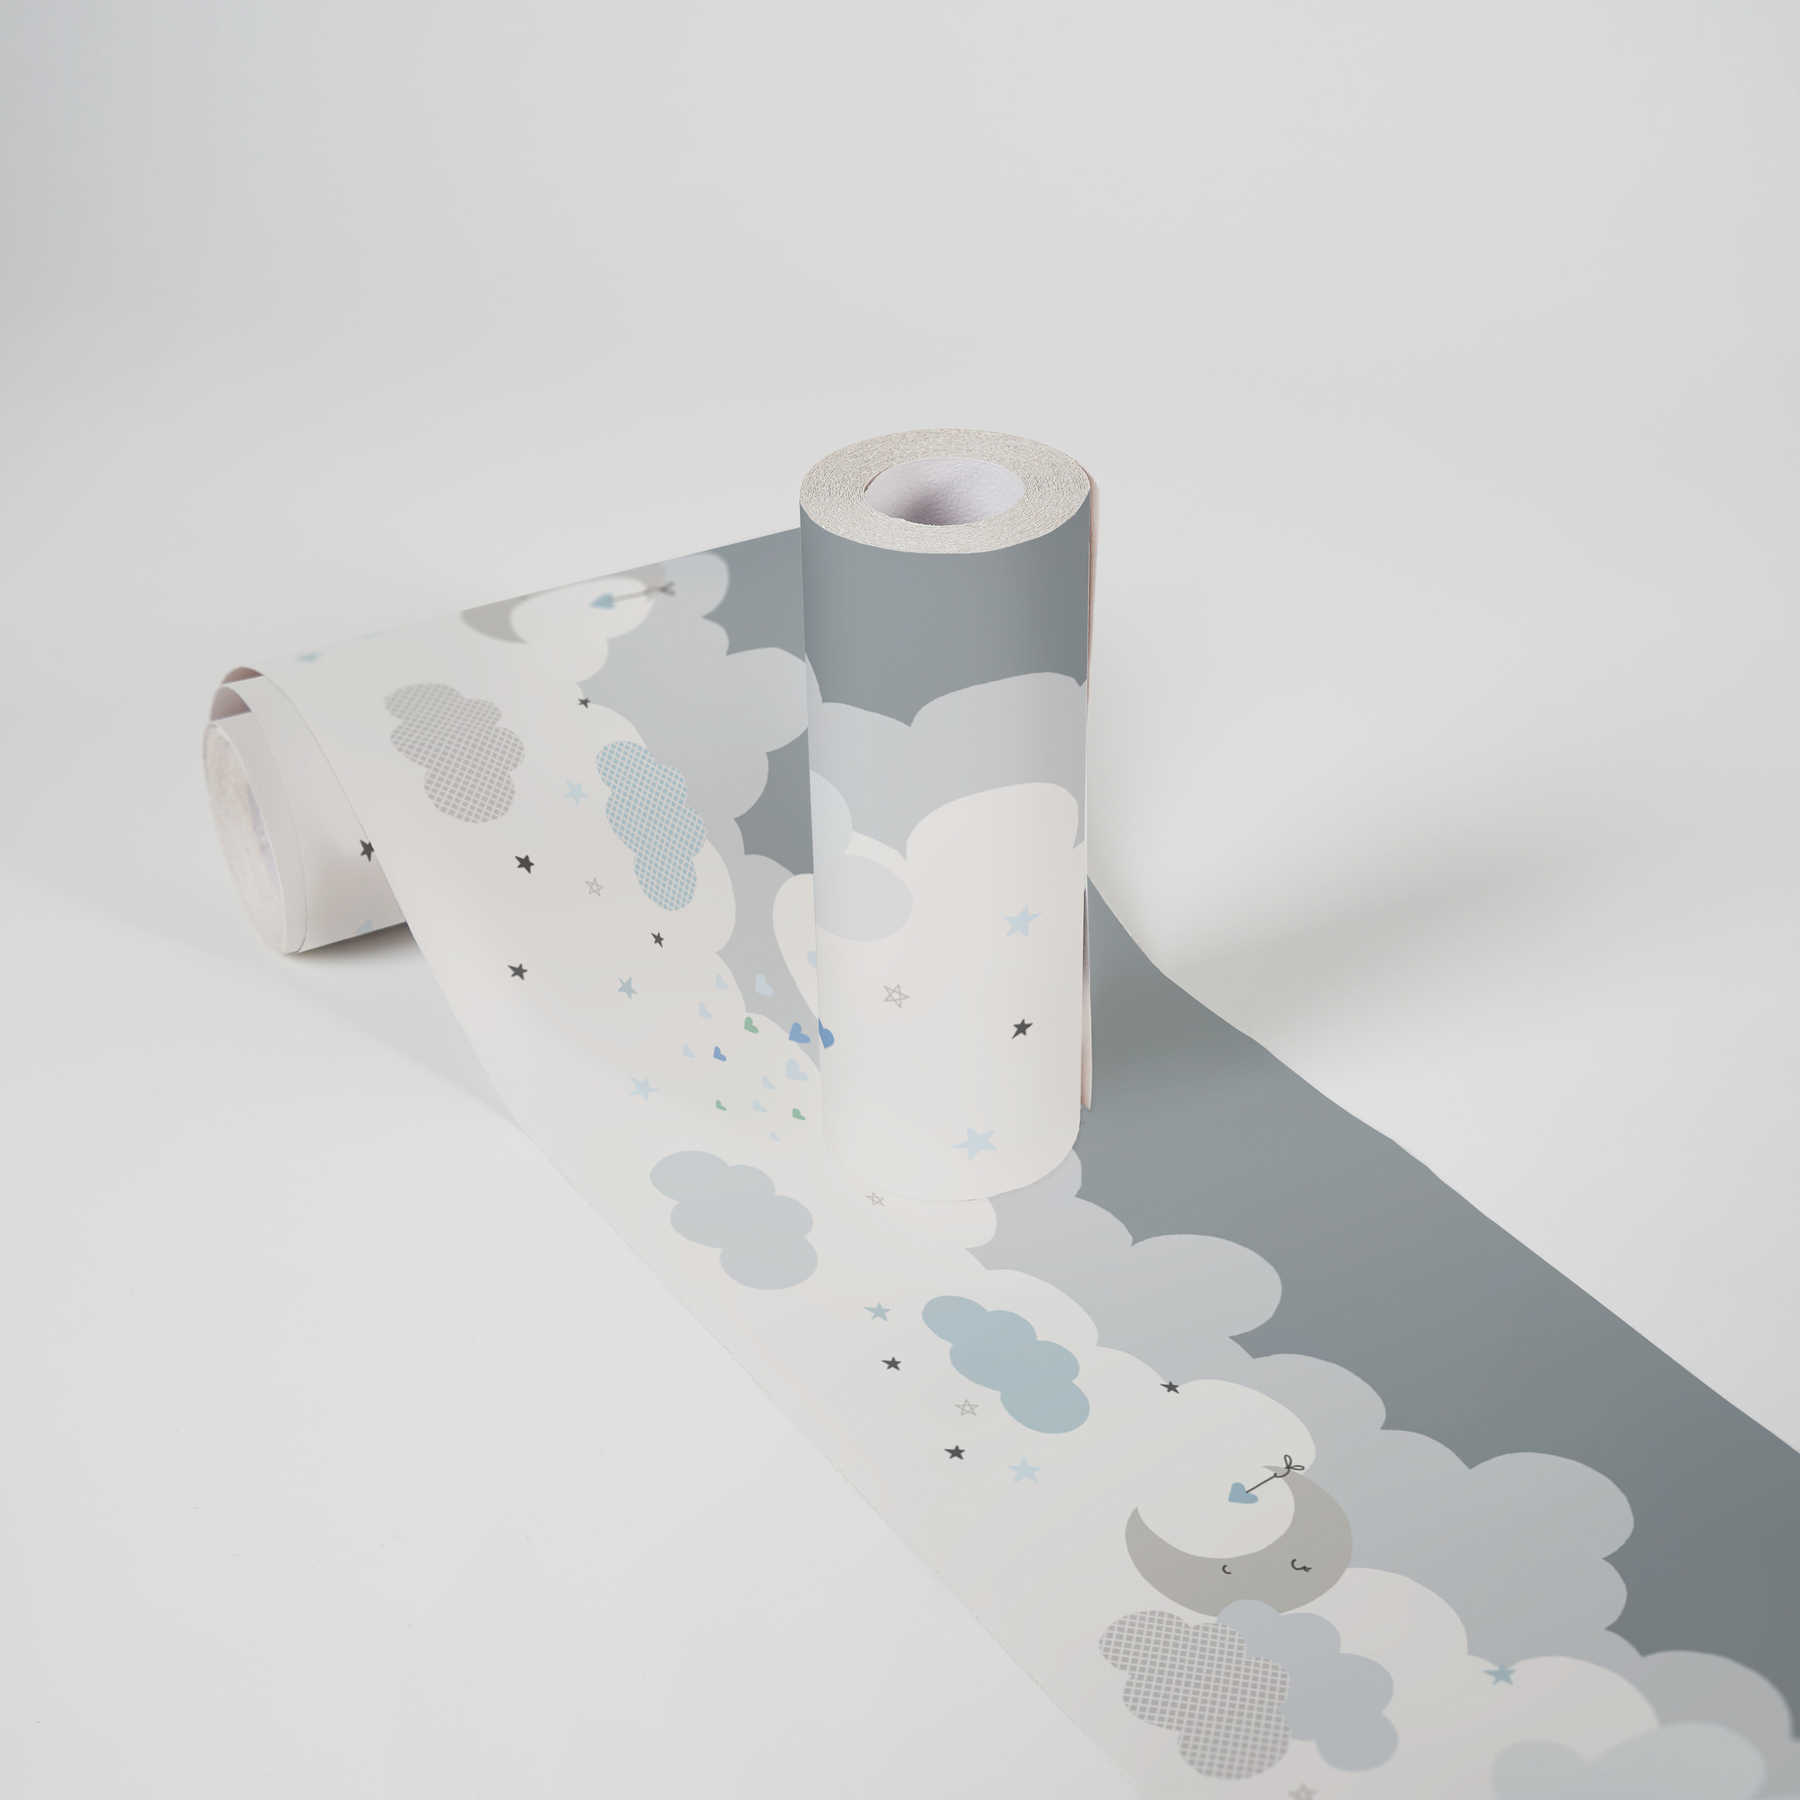             Bordura autoadhesiva para habitación de bebé "Nubes de azúcar azules" - Azul, gris, blanco
        